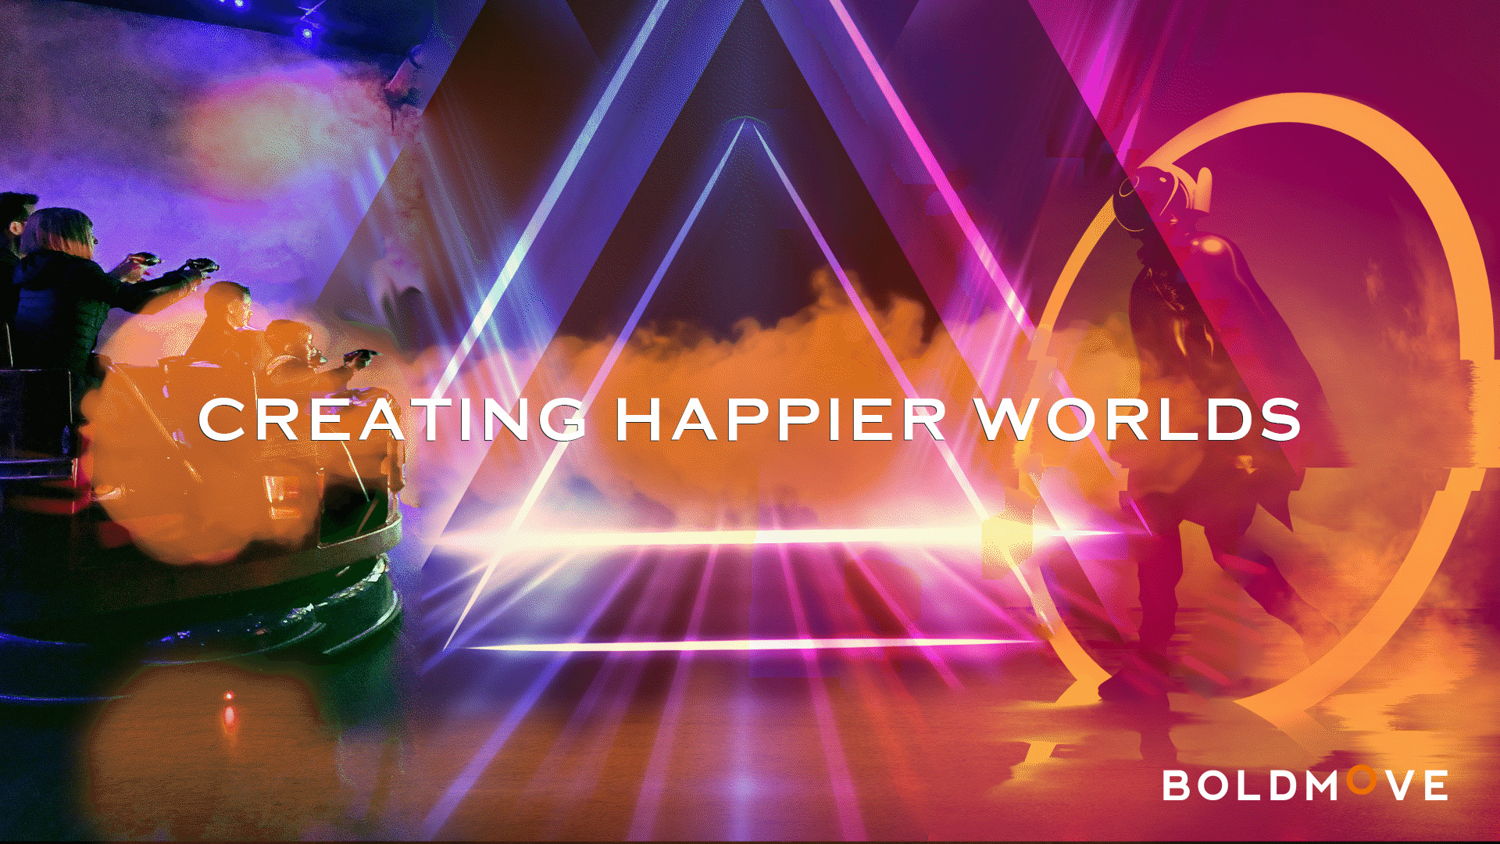 BoldMove 'Creating Happier Worlds'